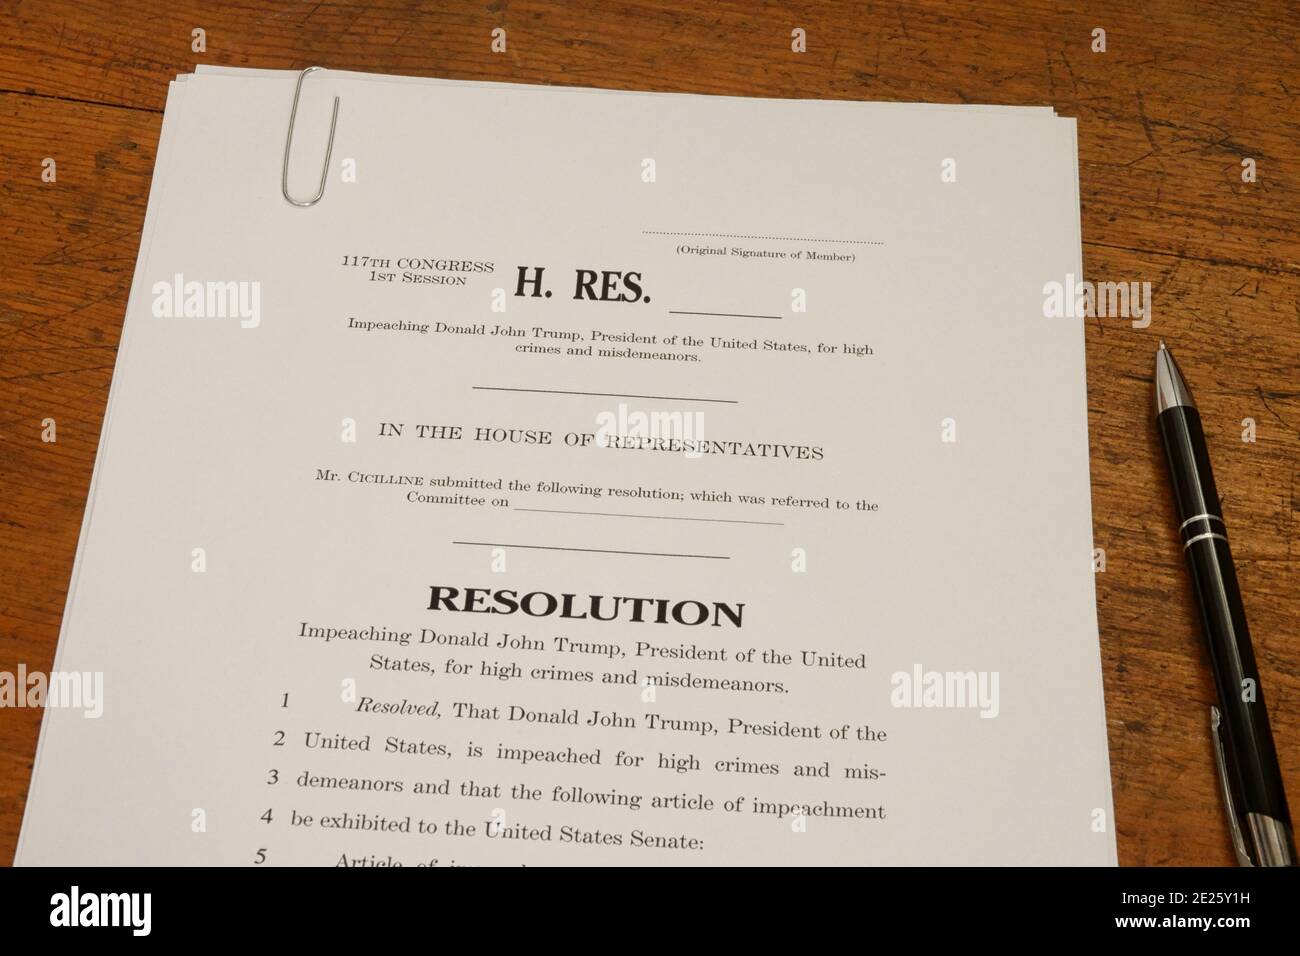 Washington, D.C. / USA - Jan. 11, 2021: A House of Representatives draft resolution for impeaching Donald John Trump is shown on a wood desk. Stock Photo